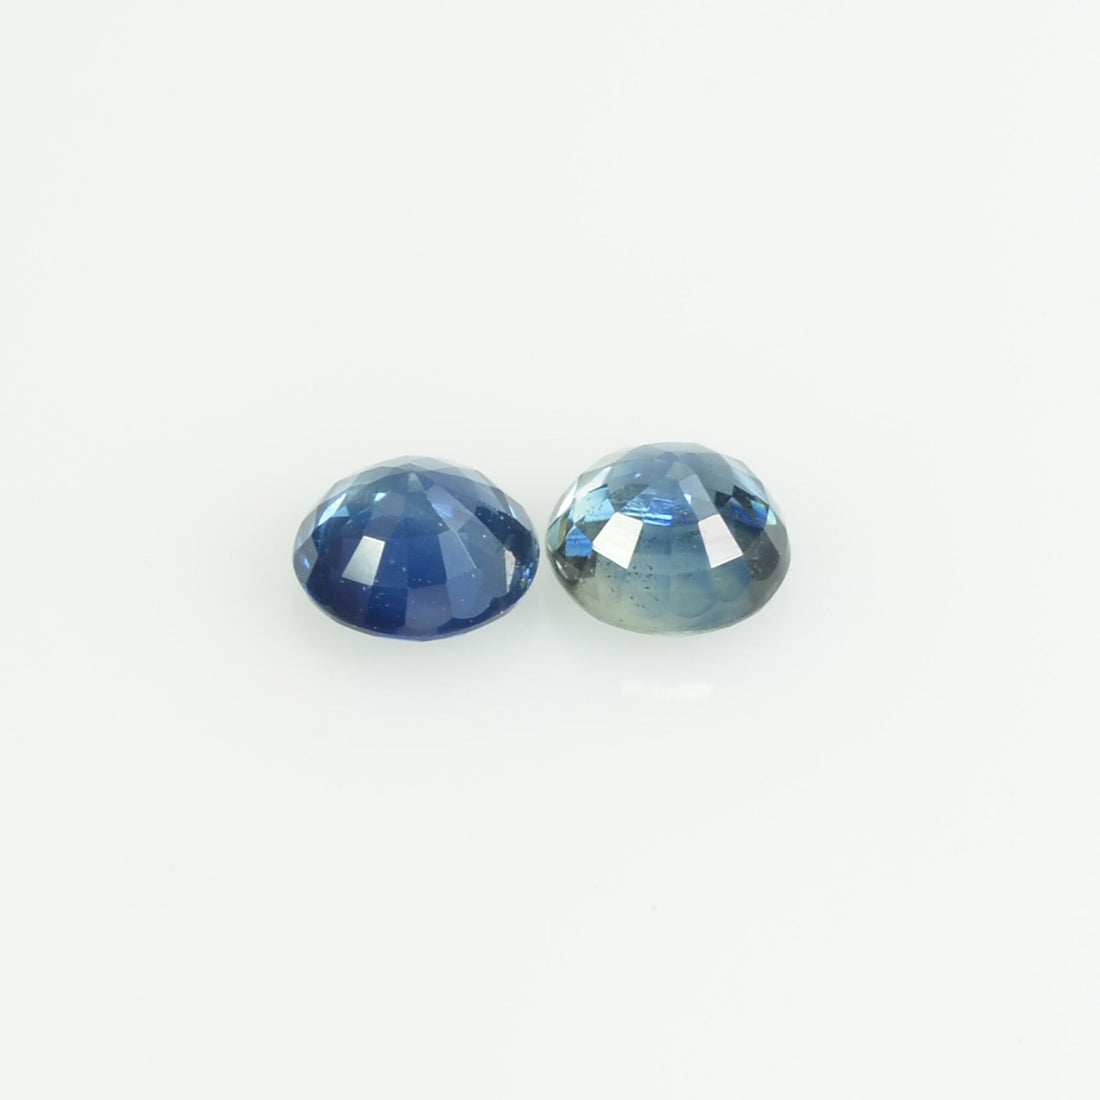 4.3mm Natural Blue Sapphire Loose Gemstone Round Cut